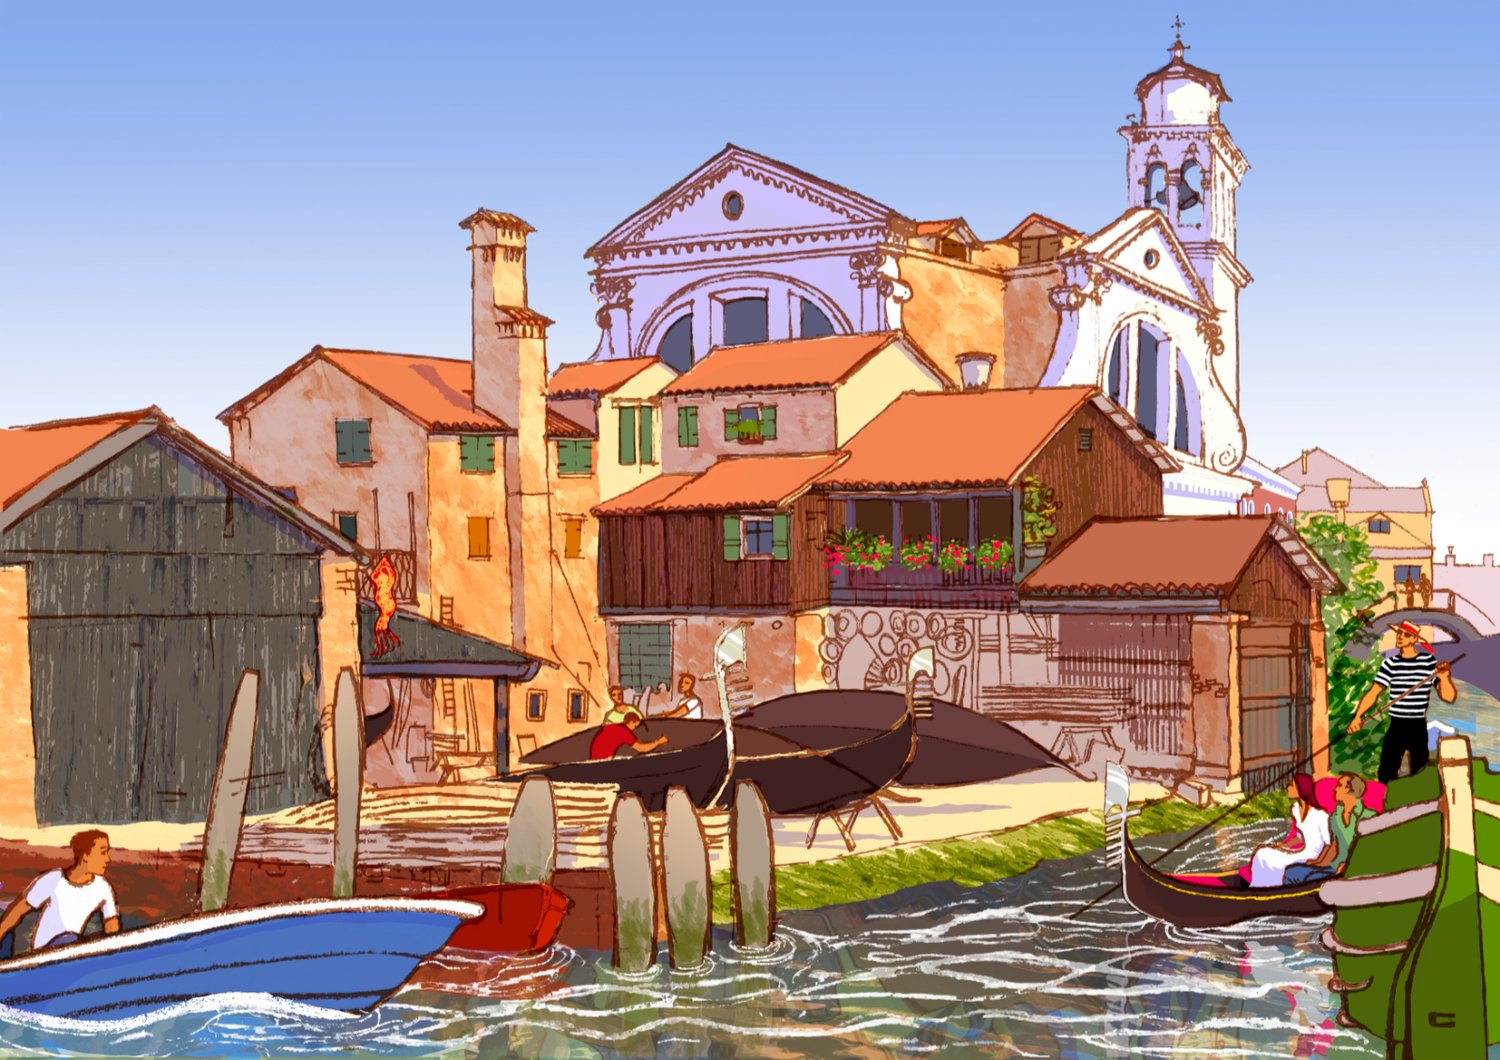 Greeting card: Venice Boatyard